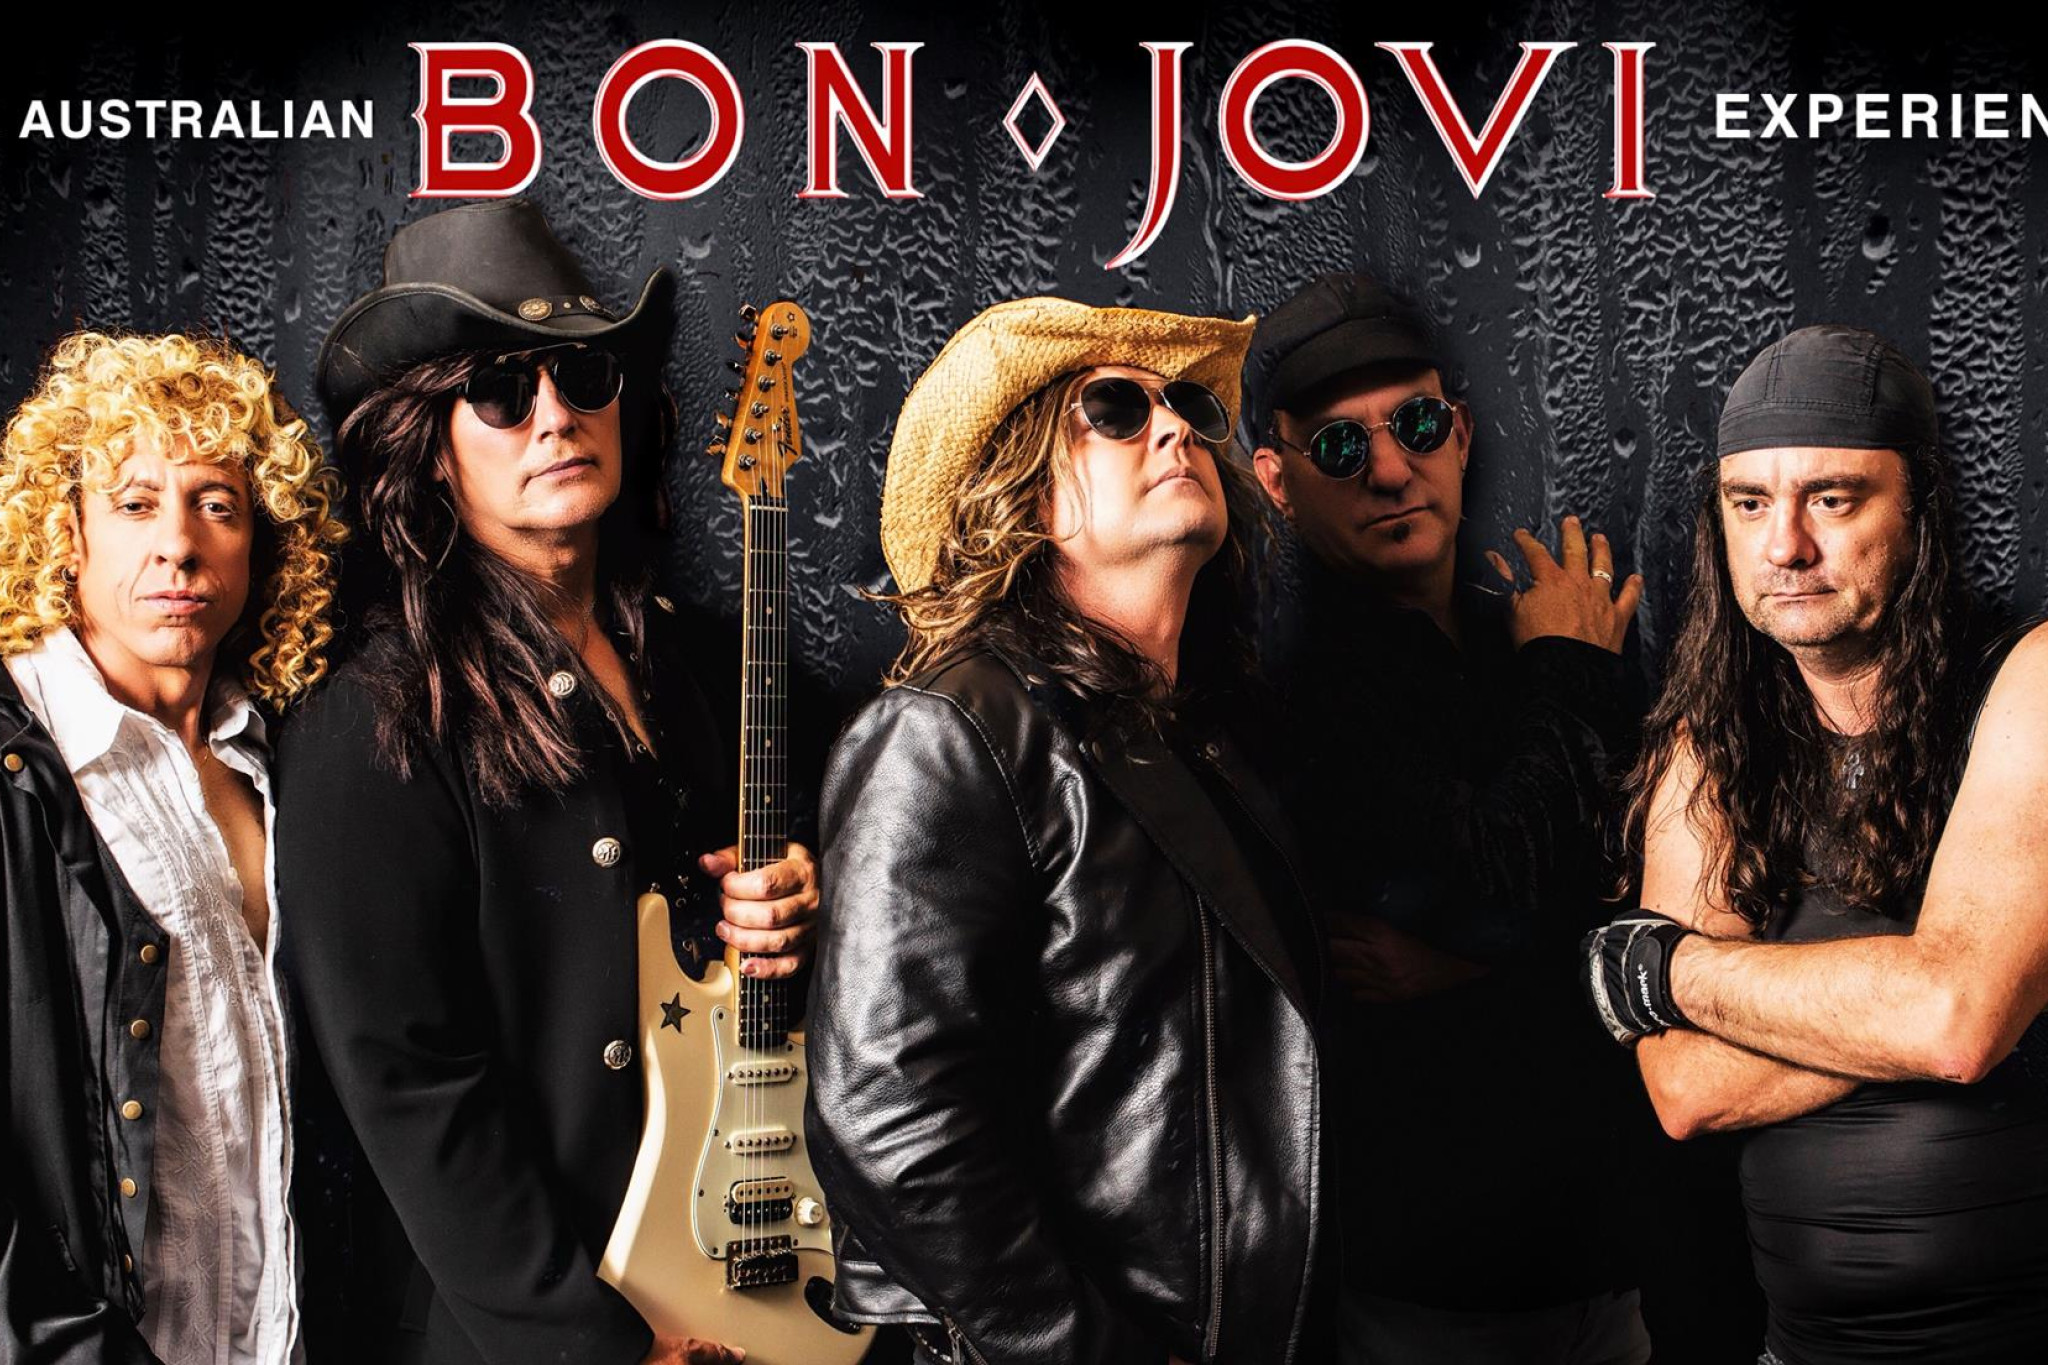 The Australian Bon Jovi Experience.